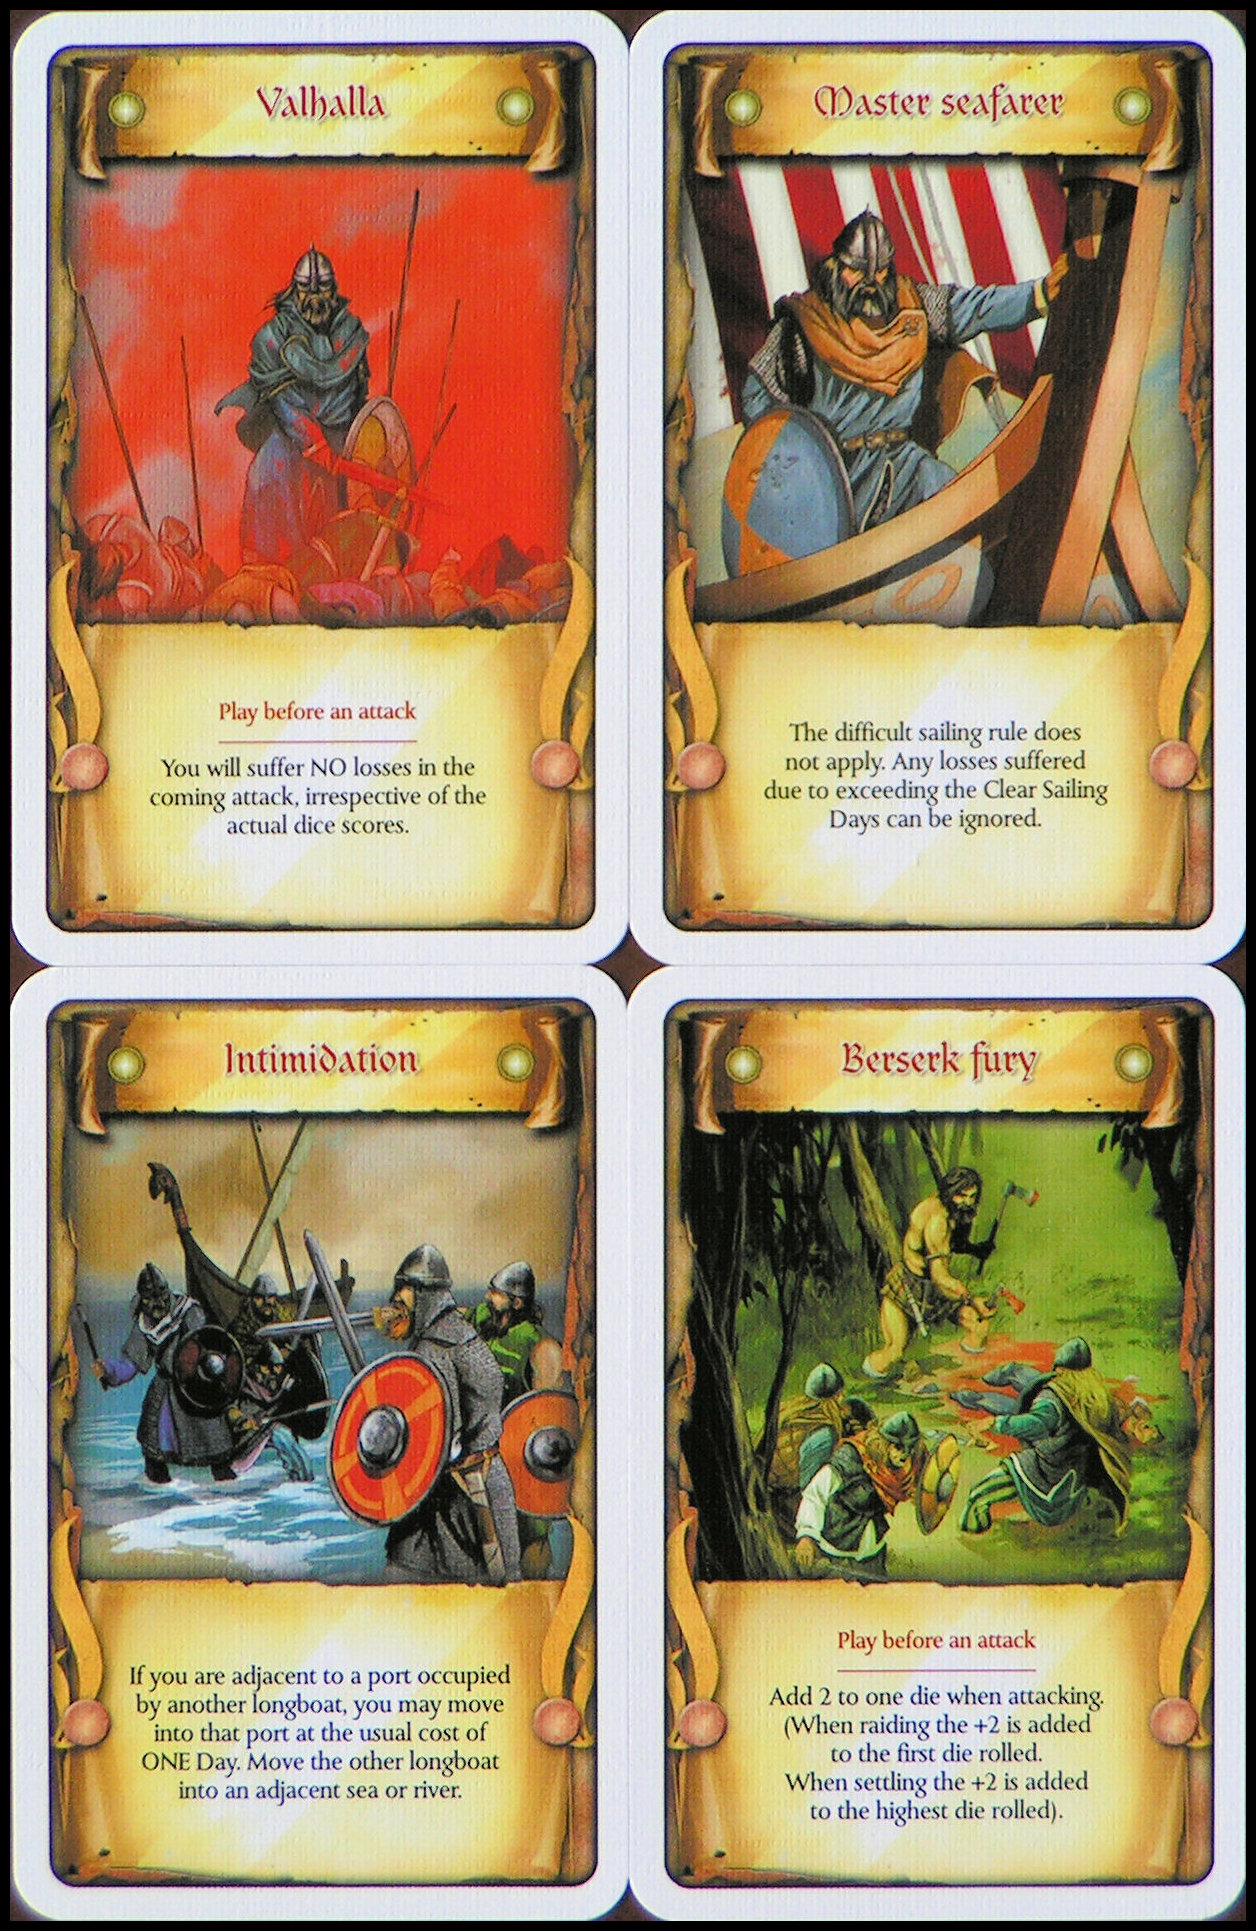 Fire & Axe: A Viking Saga - Rune Cards